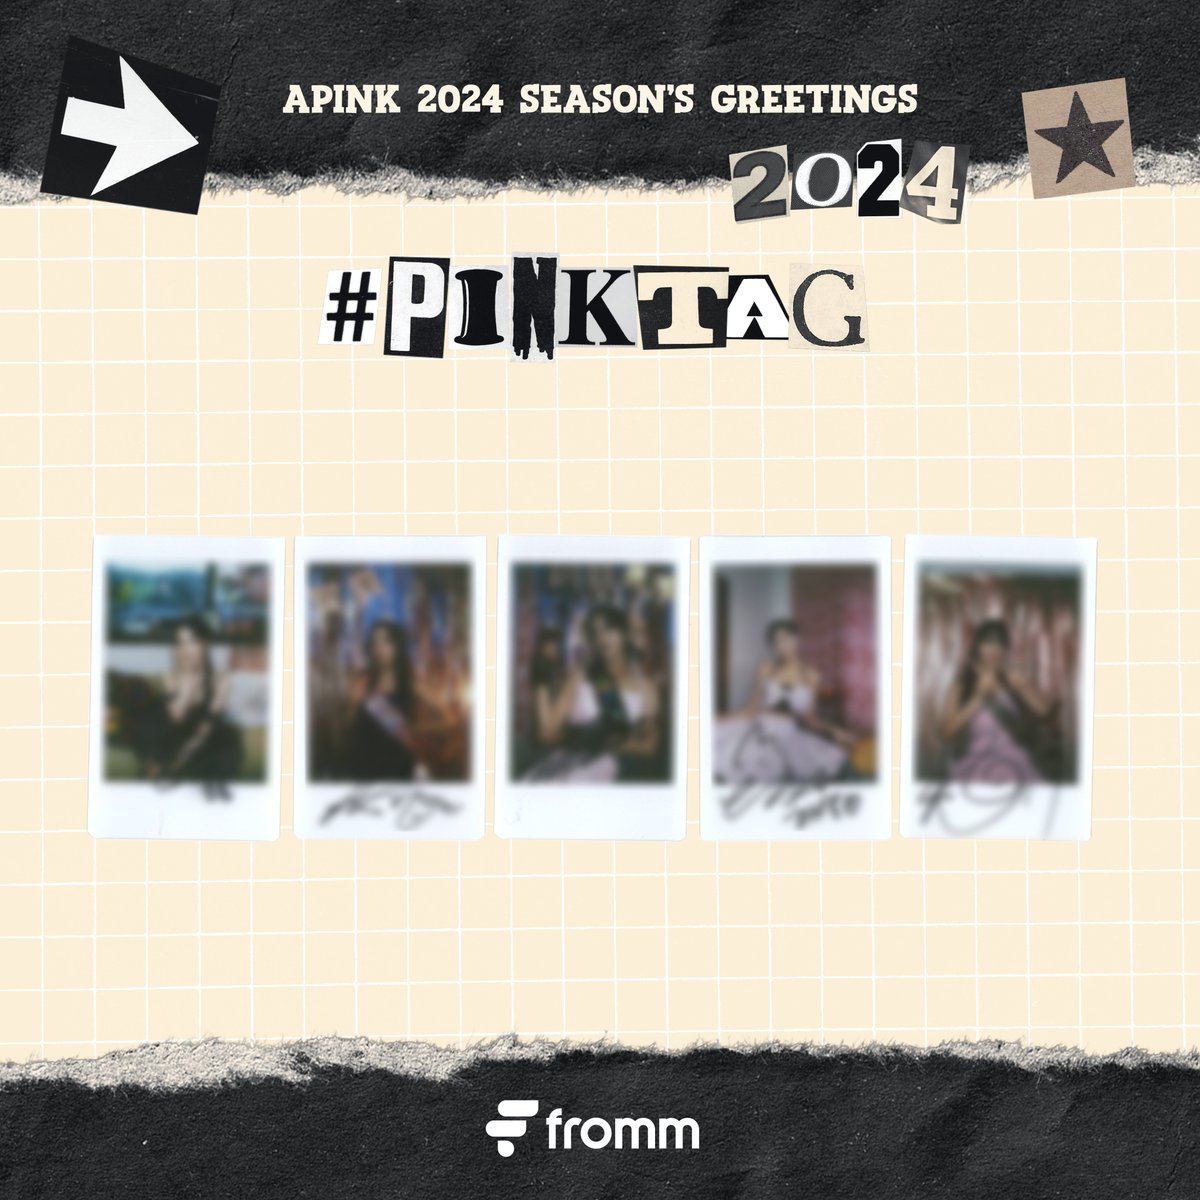 Apink 2024 Season’s Greetings [#PINKTAG] PHOTO EVENT✨

🔗bitly.ws/ZUUy

🎟미공개 포토카드 5종 중 1종 (볼하트 Ver.) 랜덤 증정
🎟30명 사인 폴라로이드 랜덤 증정

📆~ 11.24 23:59 (KST)

#Apink #에이핑크 #PINKTAG
@Apink_2011